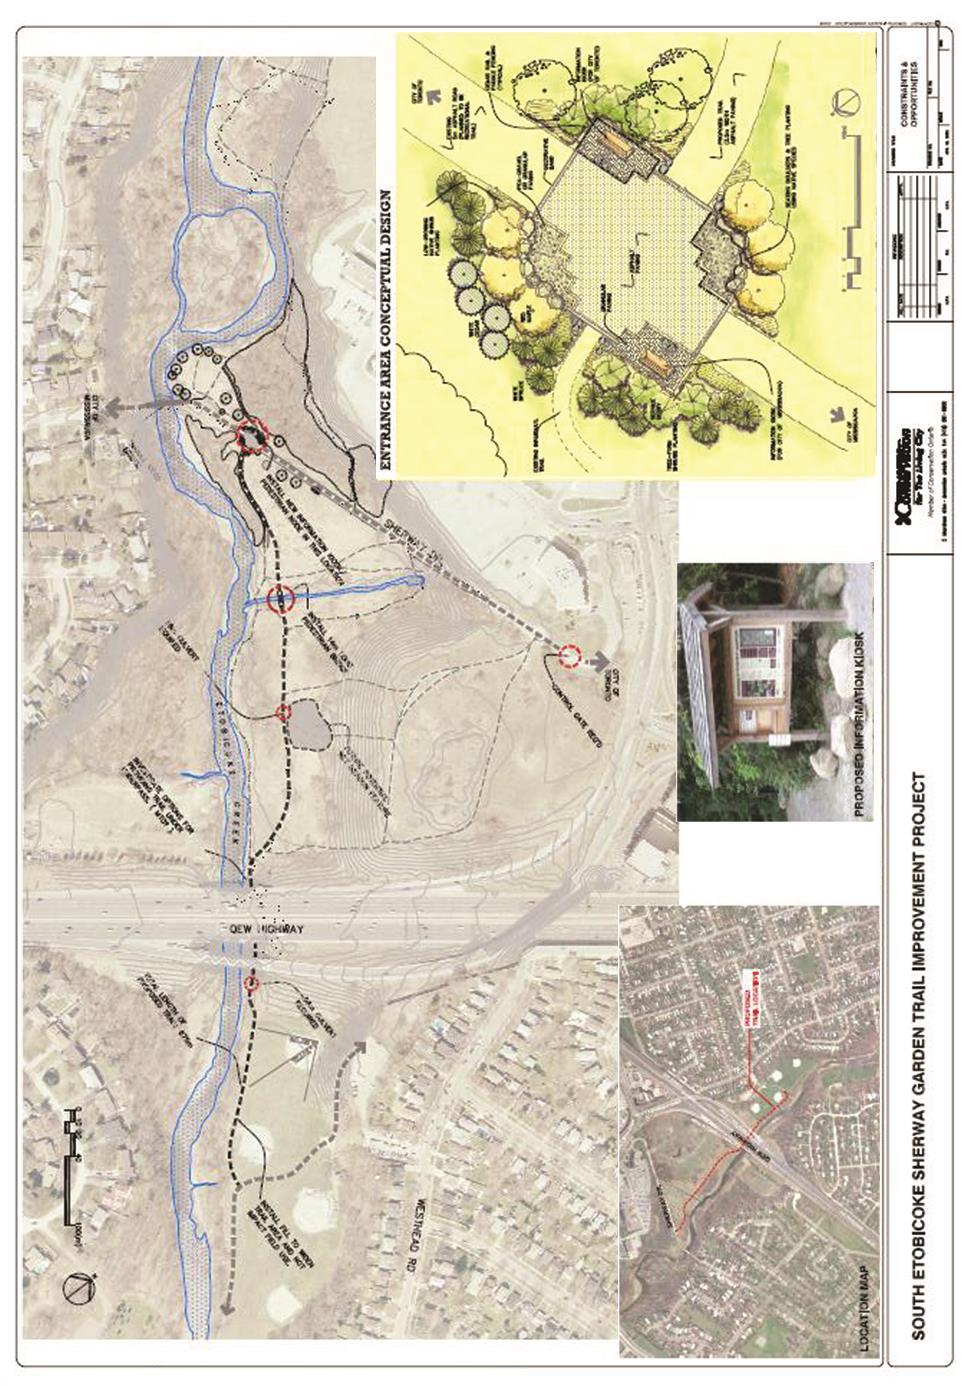 Attachment 1: Map of Sherway Link of Etobicoke Creek Trail Improvements Staff